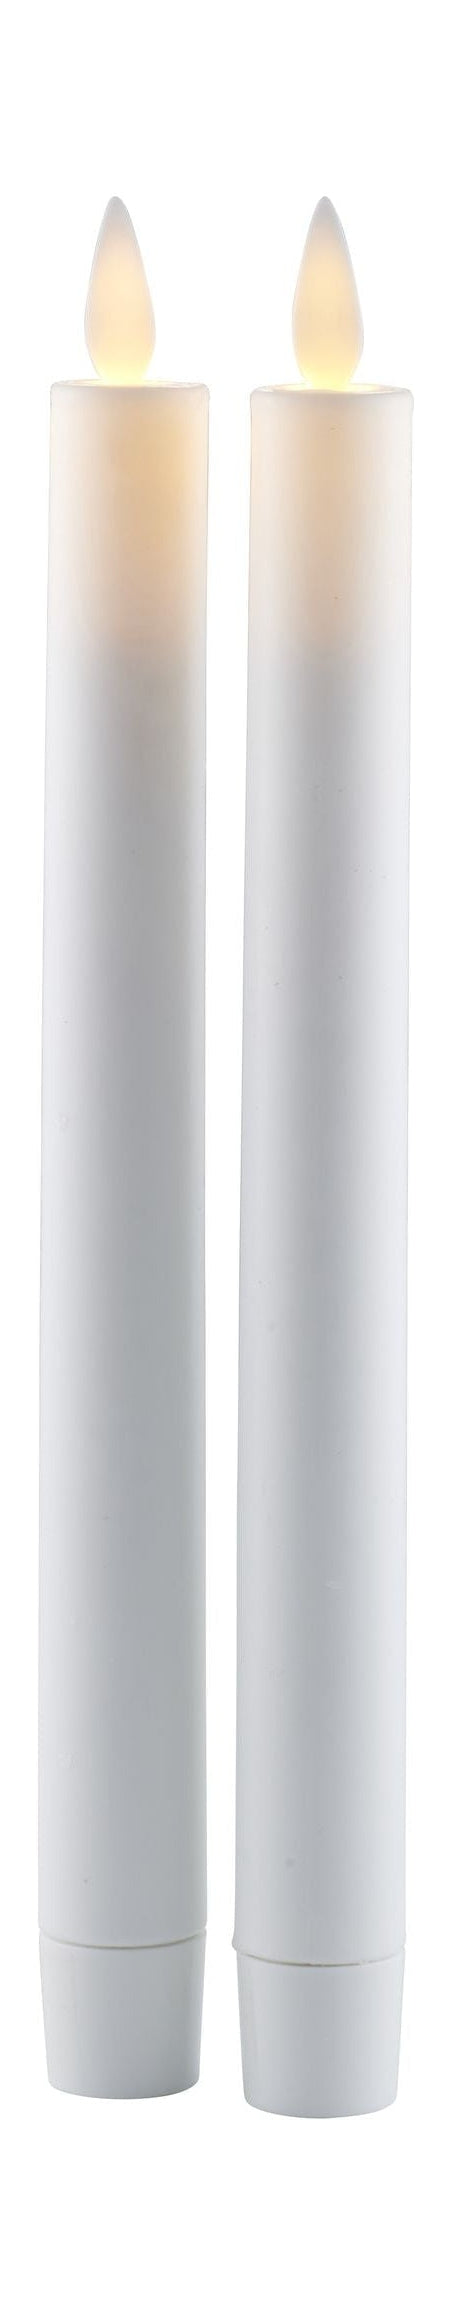 Sirius Sara Corona recargable LED Vela blanca, Ø2,2x H25 cm